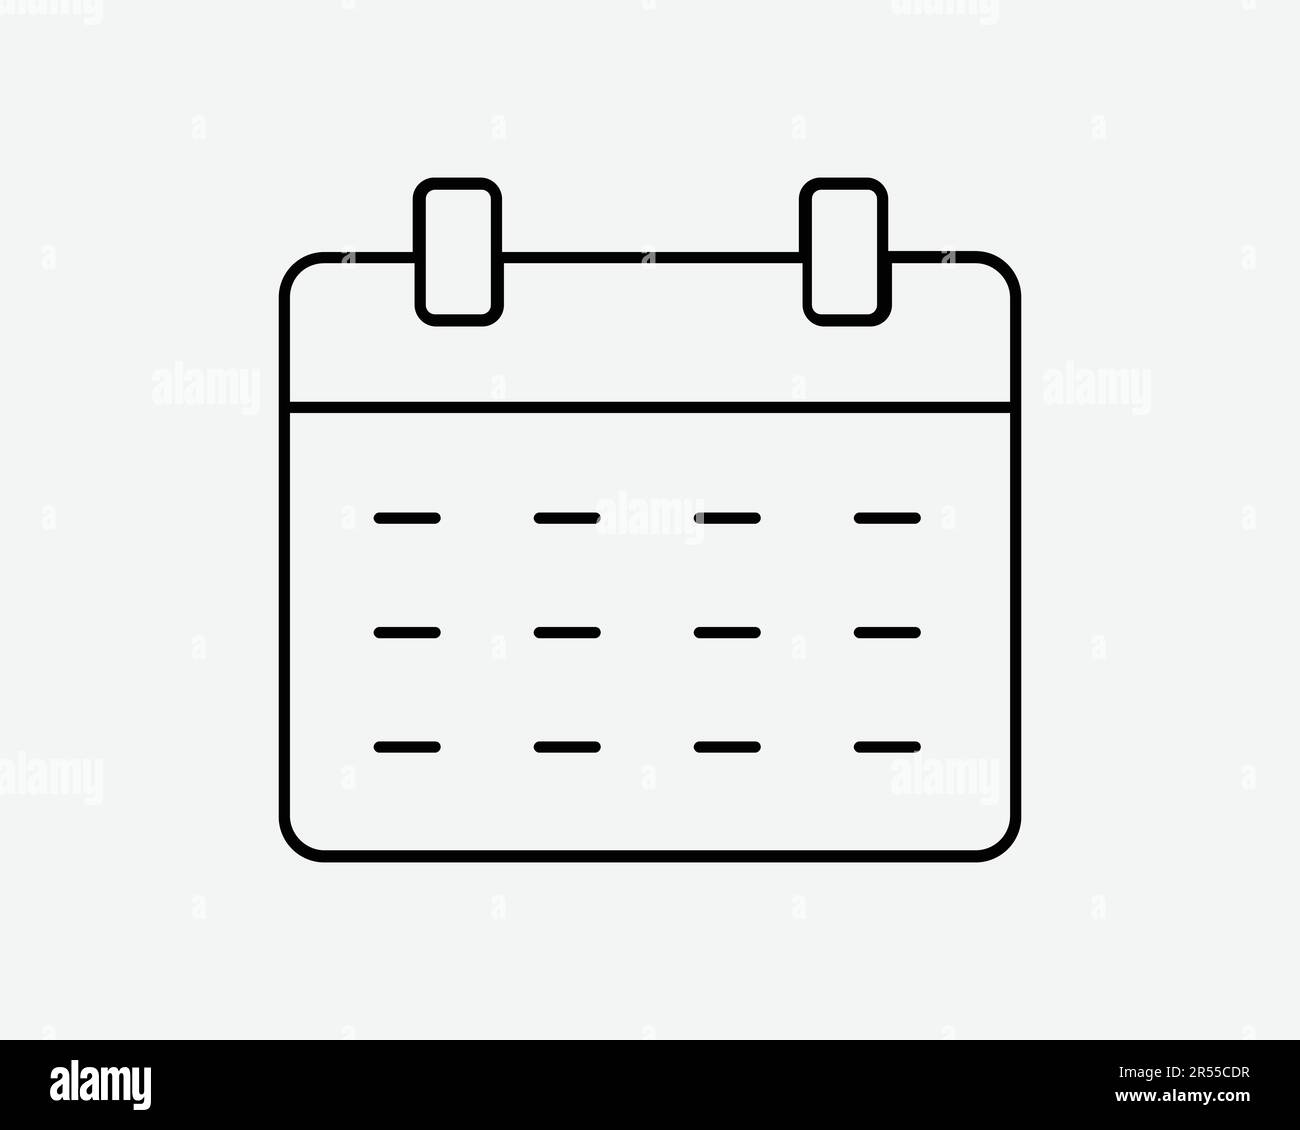 Calendar Line Icon. Schedule Appointment Reminder Event Dateline ...